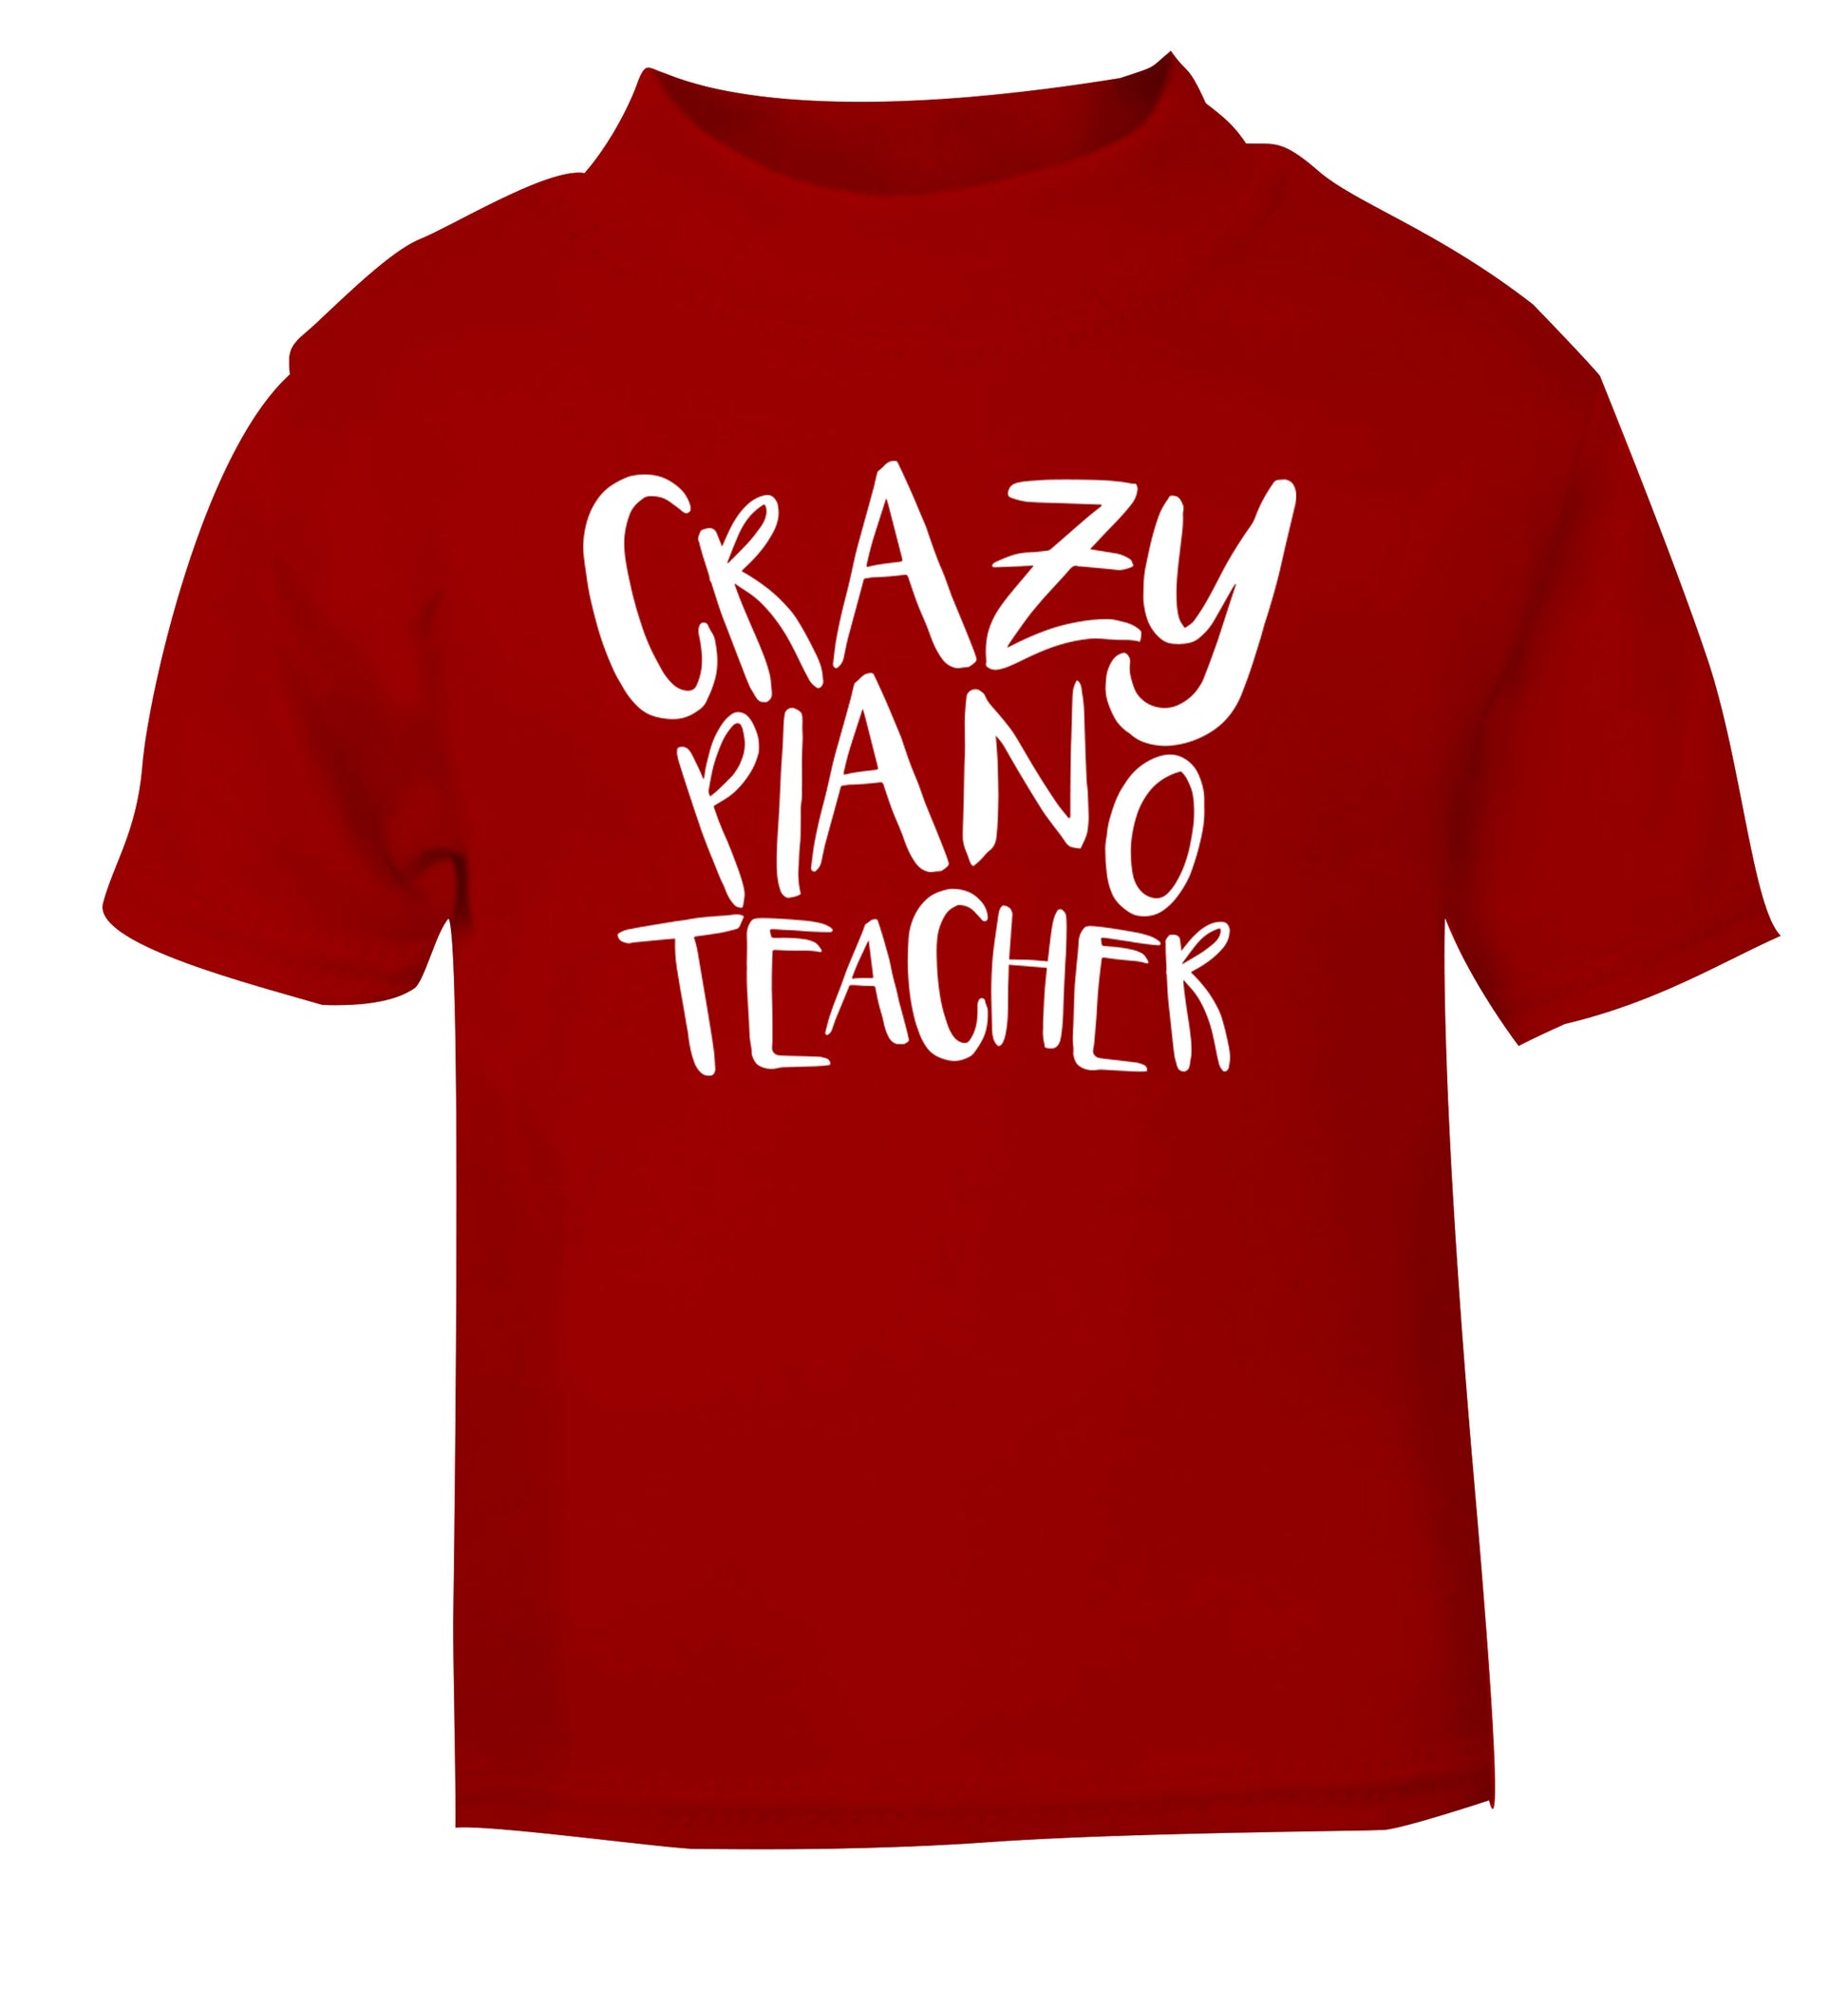 Crazy piano teacher red Baby Toddler Tshirt 2 Years